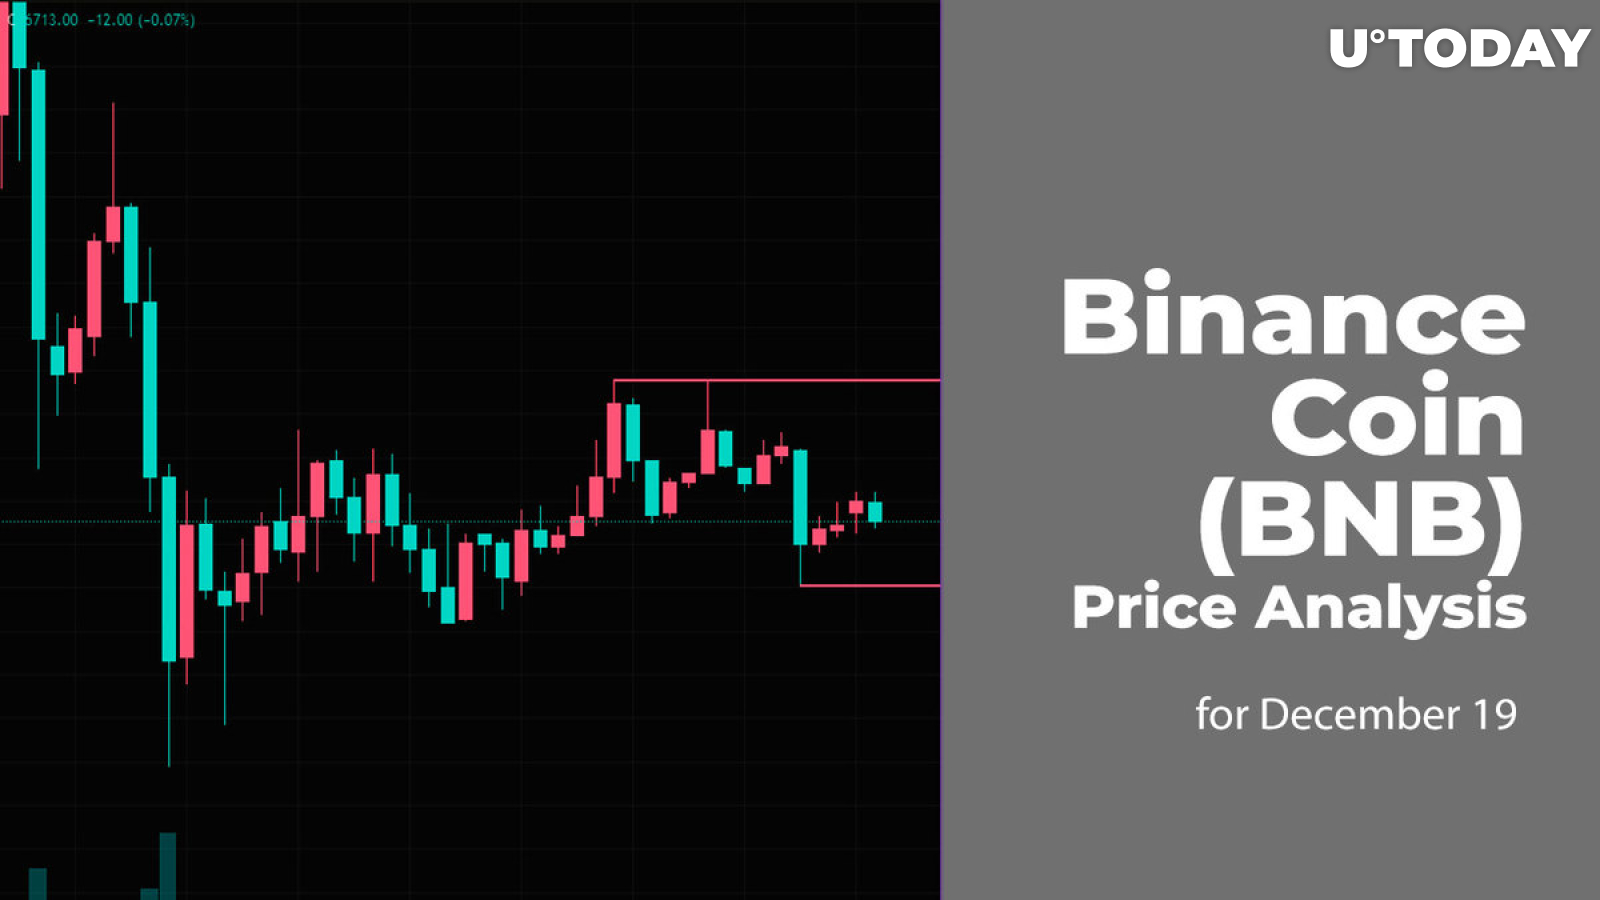 Binance Coin (BNB) Price Analysis for December 19